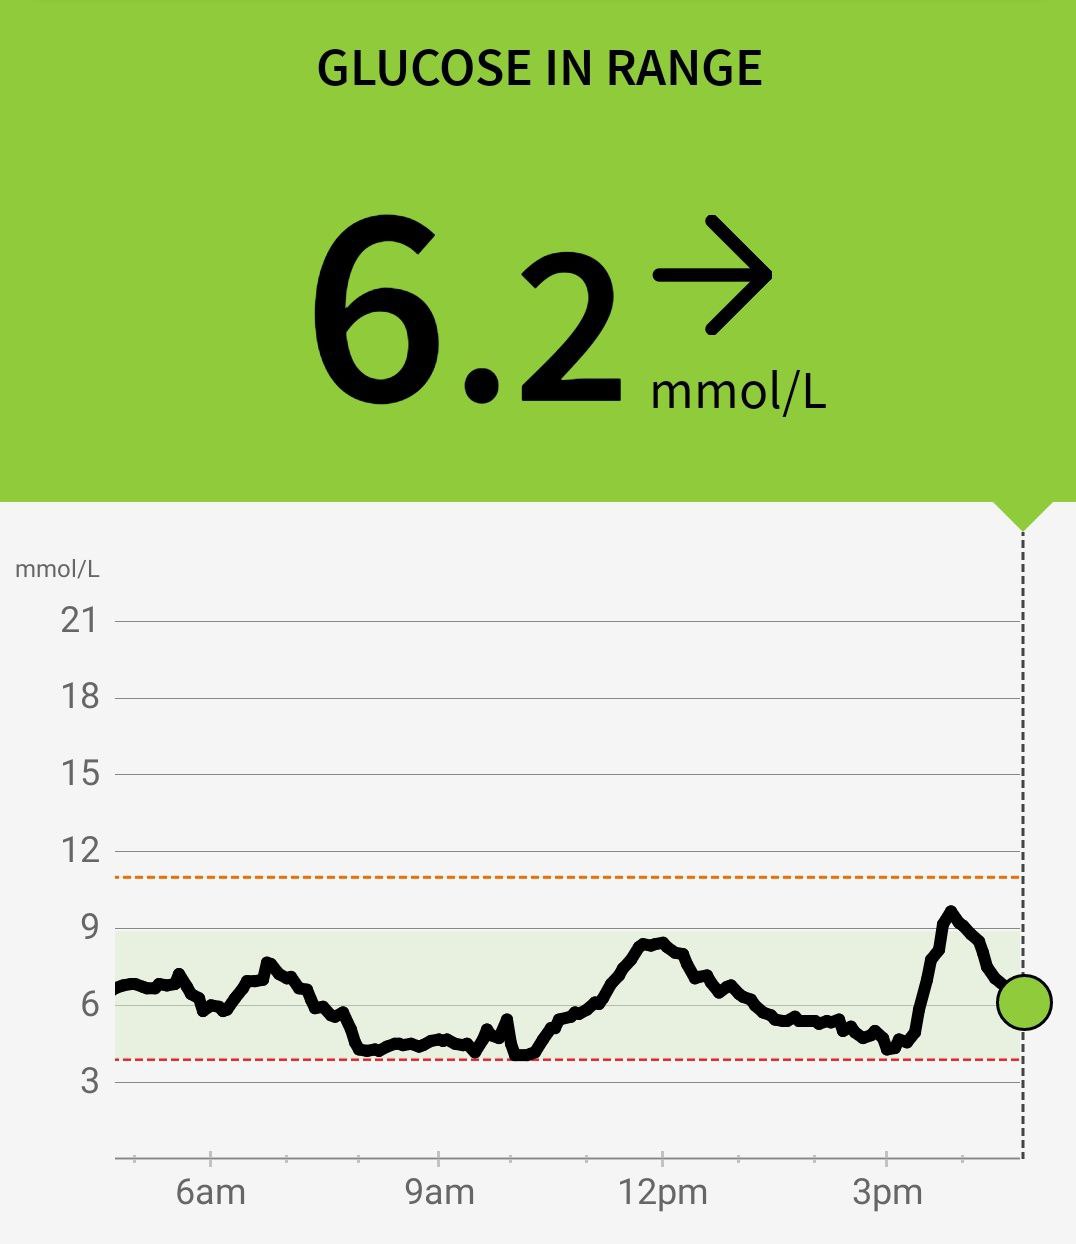 A screenshot of a glucose monitor tracking graph